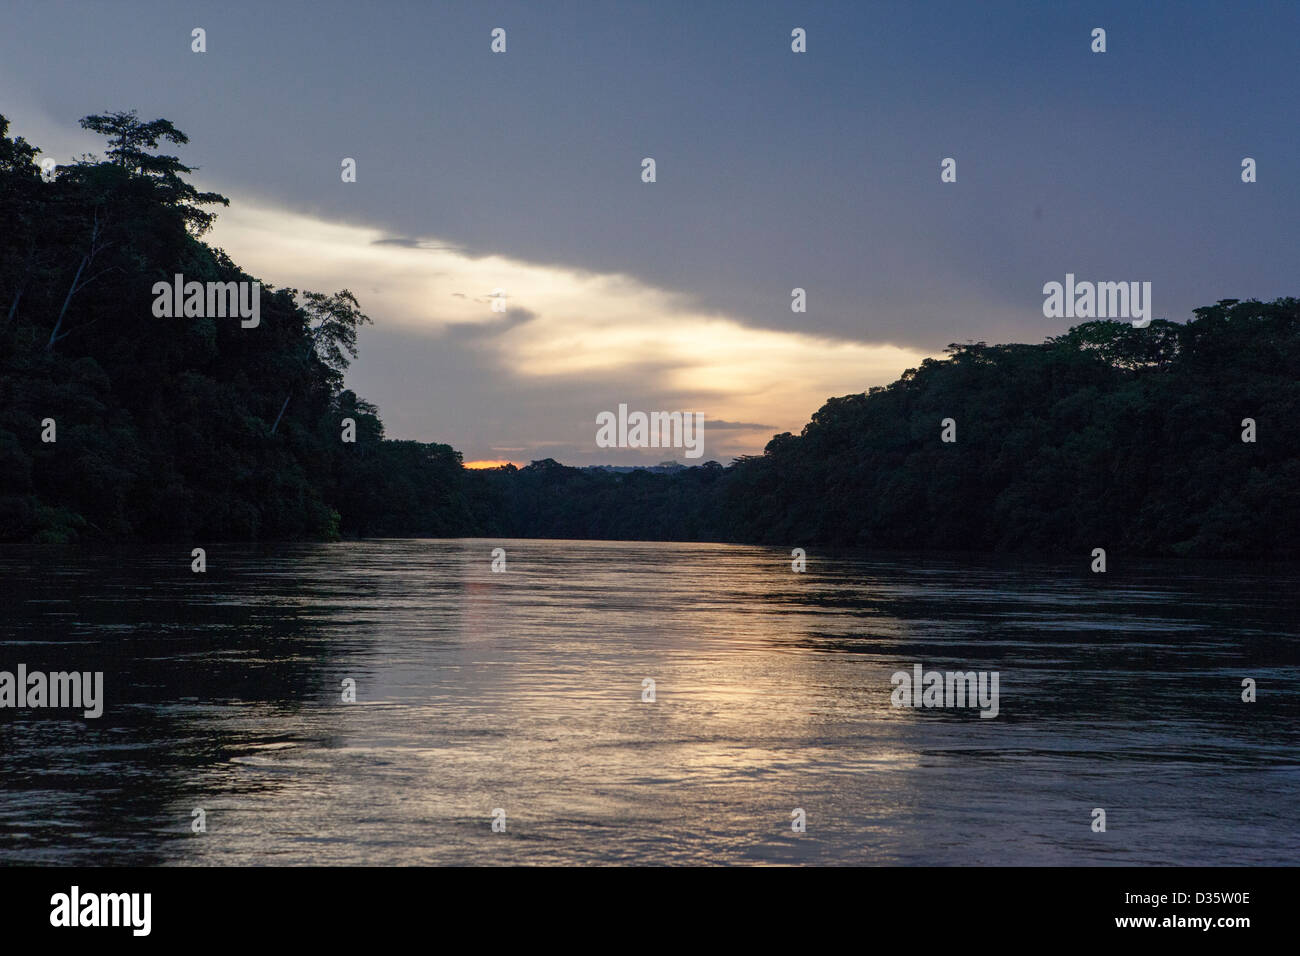 CONGO, 29th Sept 2012: The Dja river at twilight. Stock Photo